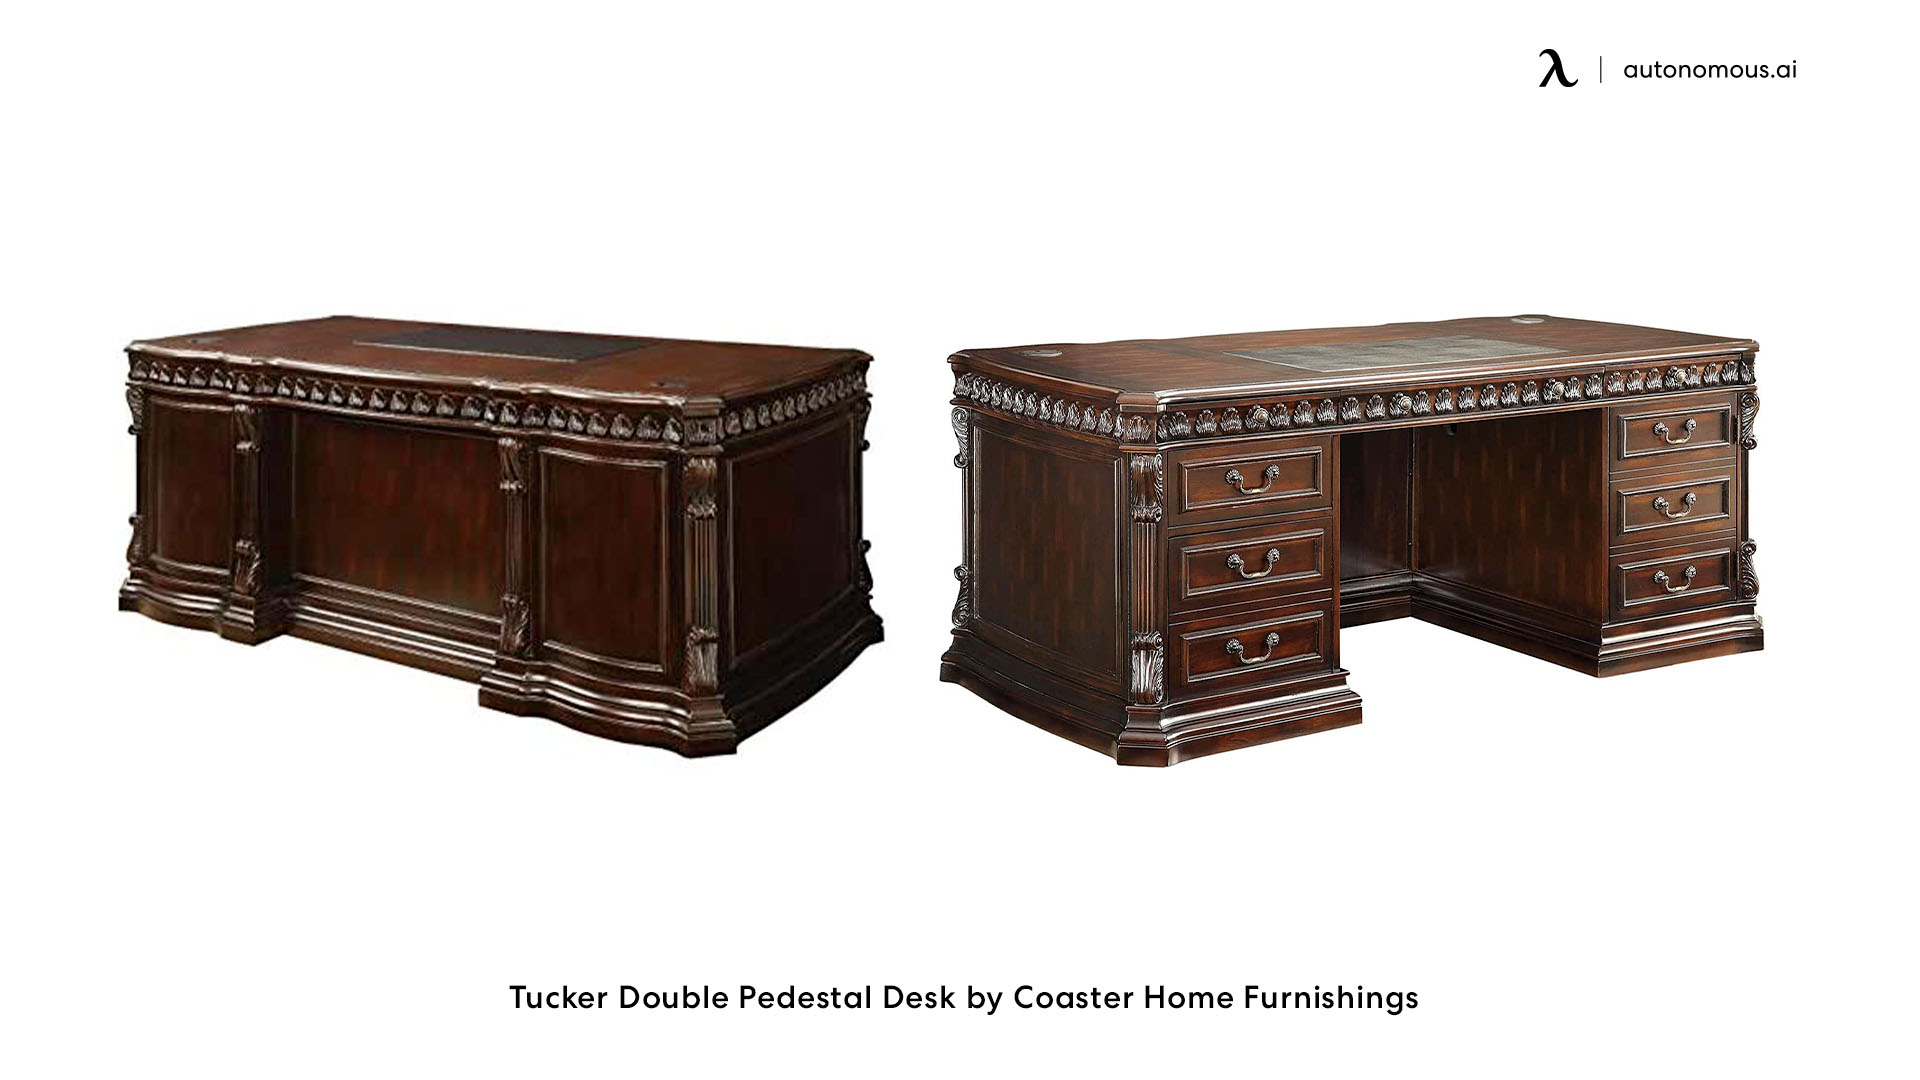 Tucker Double Pedestal Desk from Coaster Home Furnishings